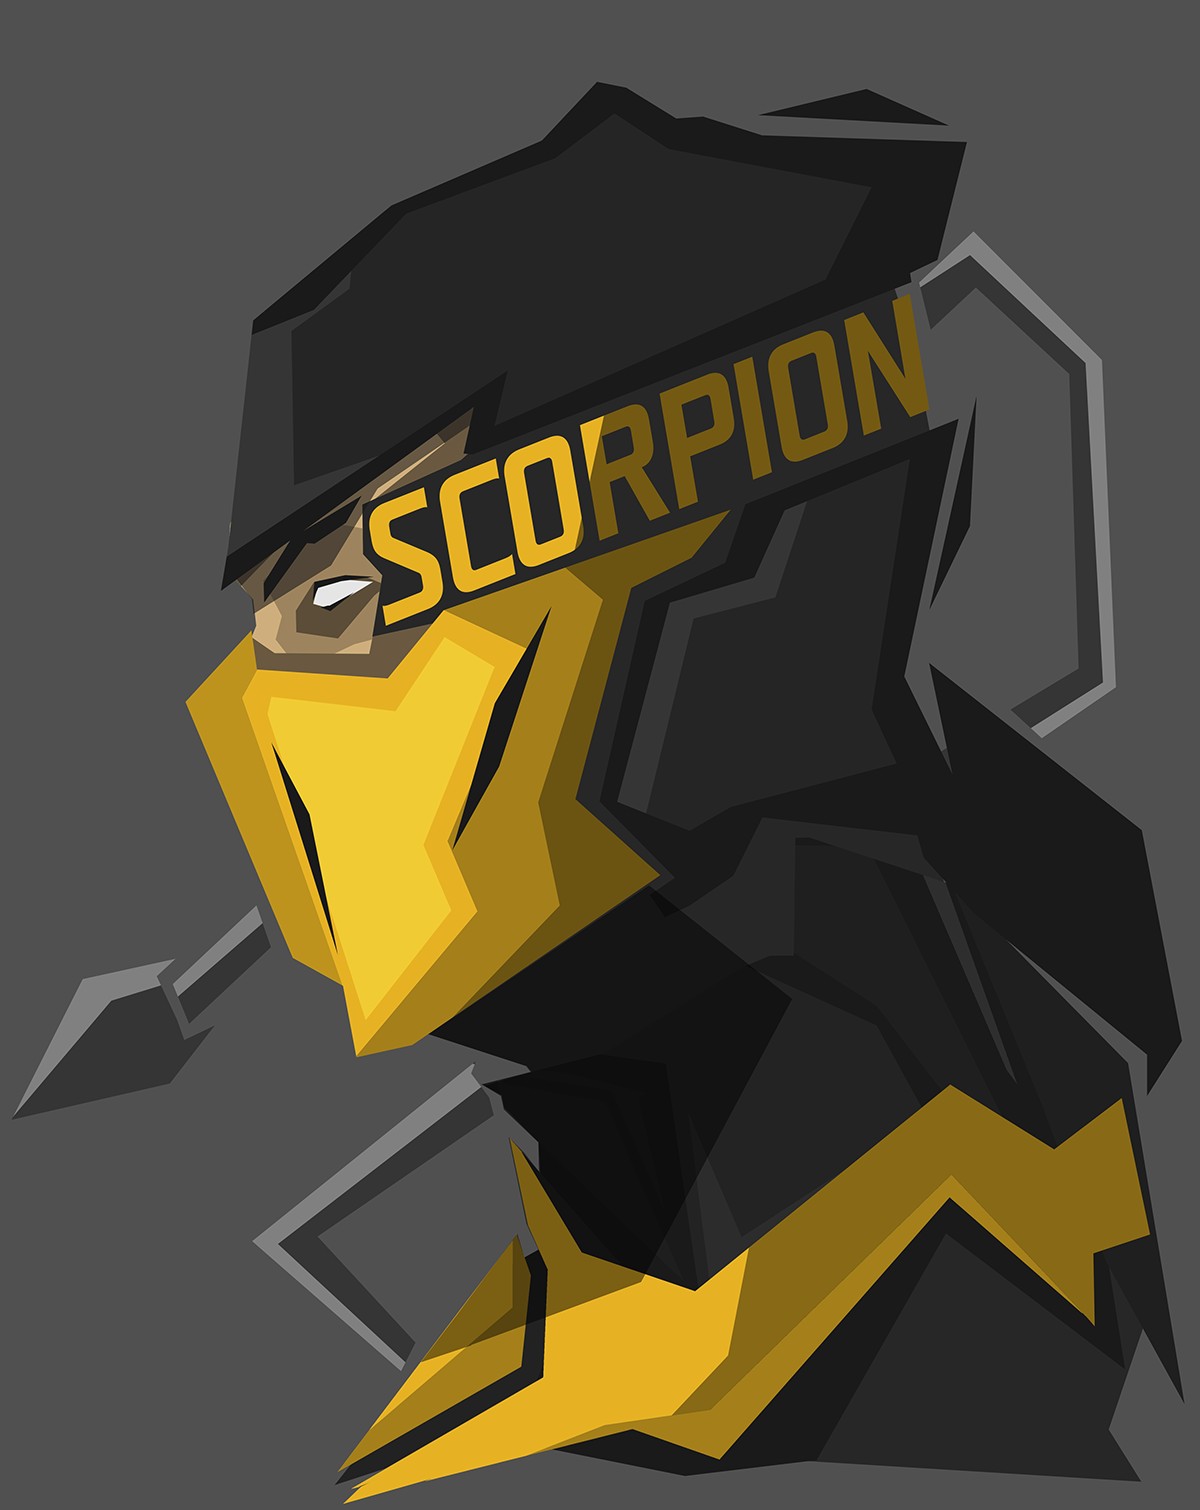 Scorpion (character), Mortal Kombat, Gray background Wallpaper